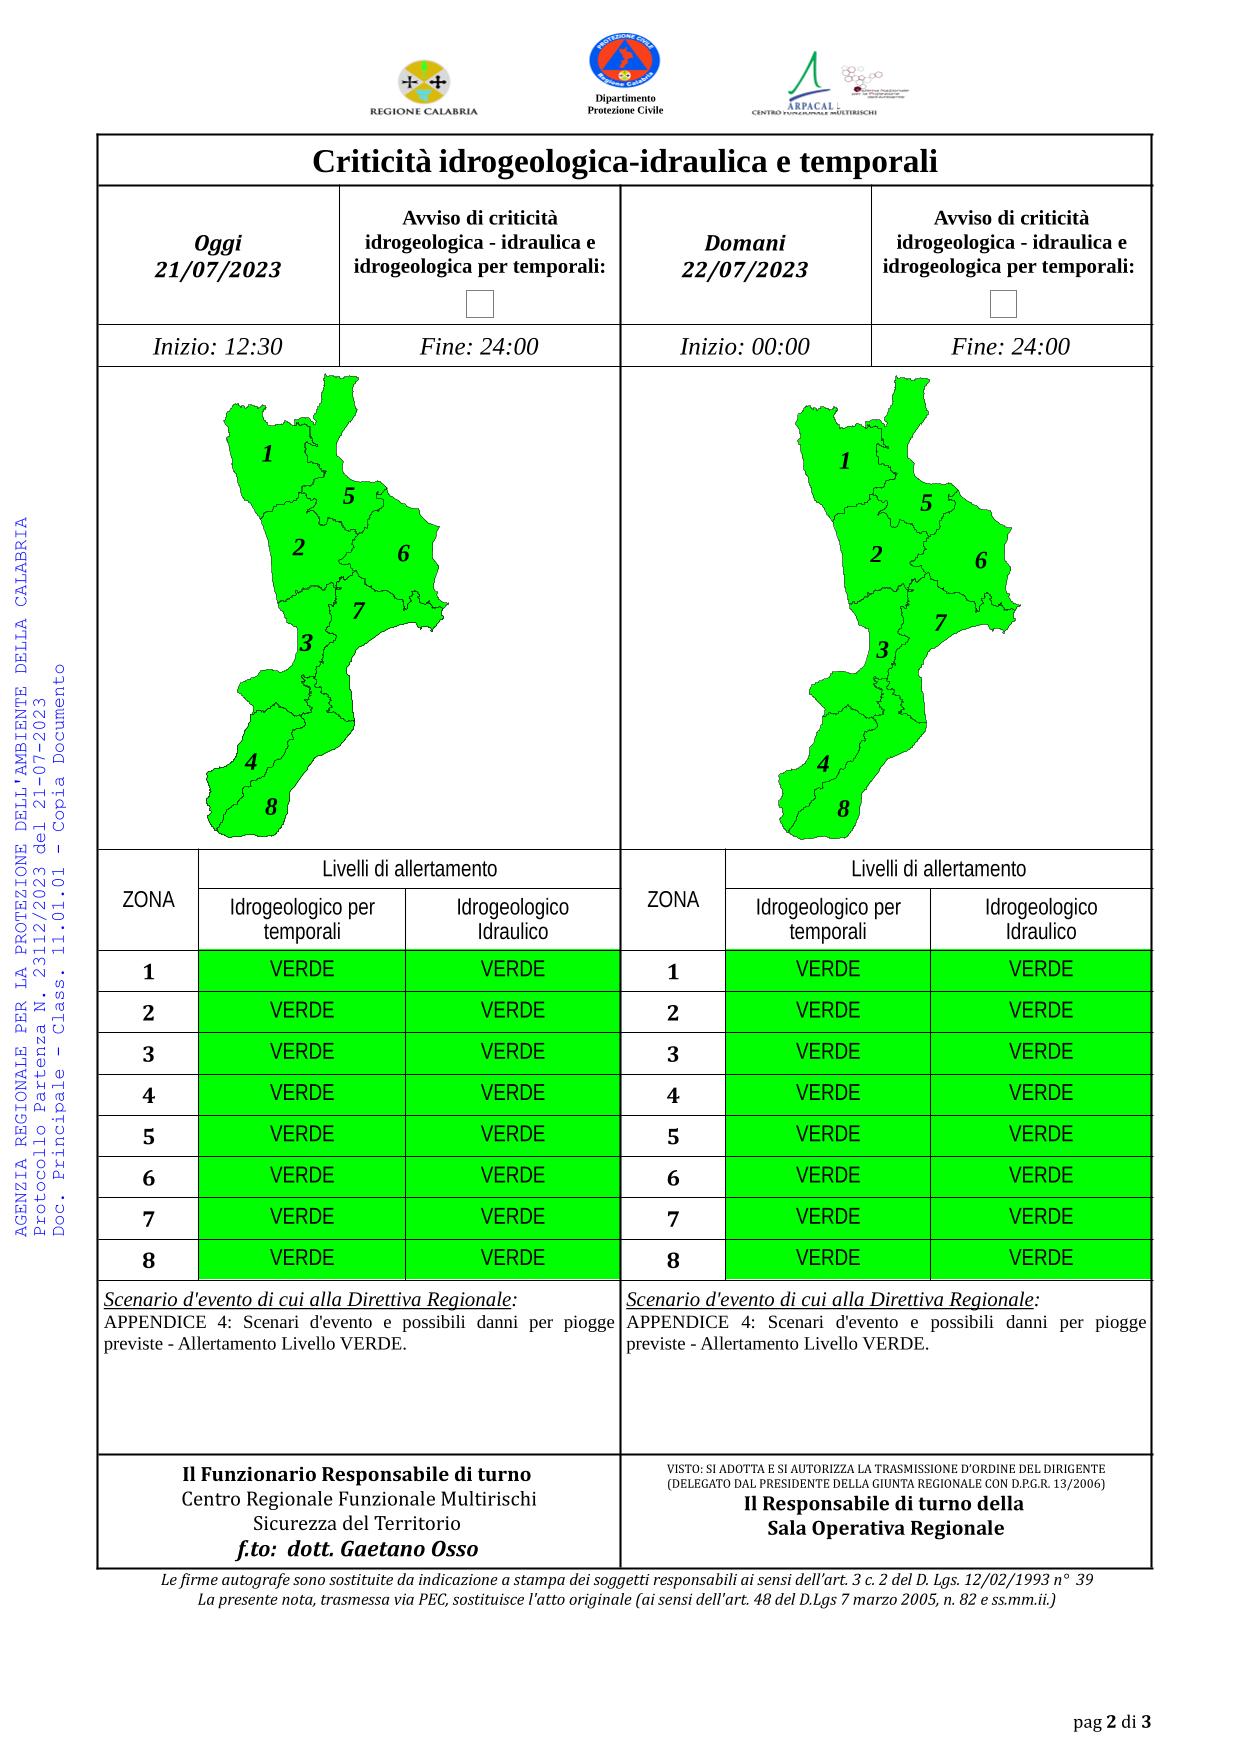 Criticità idrogeologica-idraulica e temporali in Calabria 21-07-2023